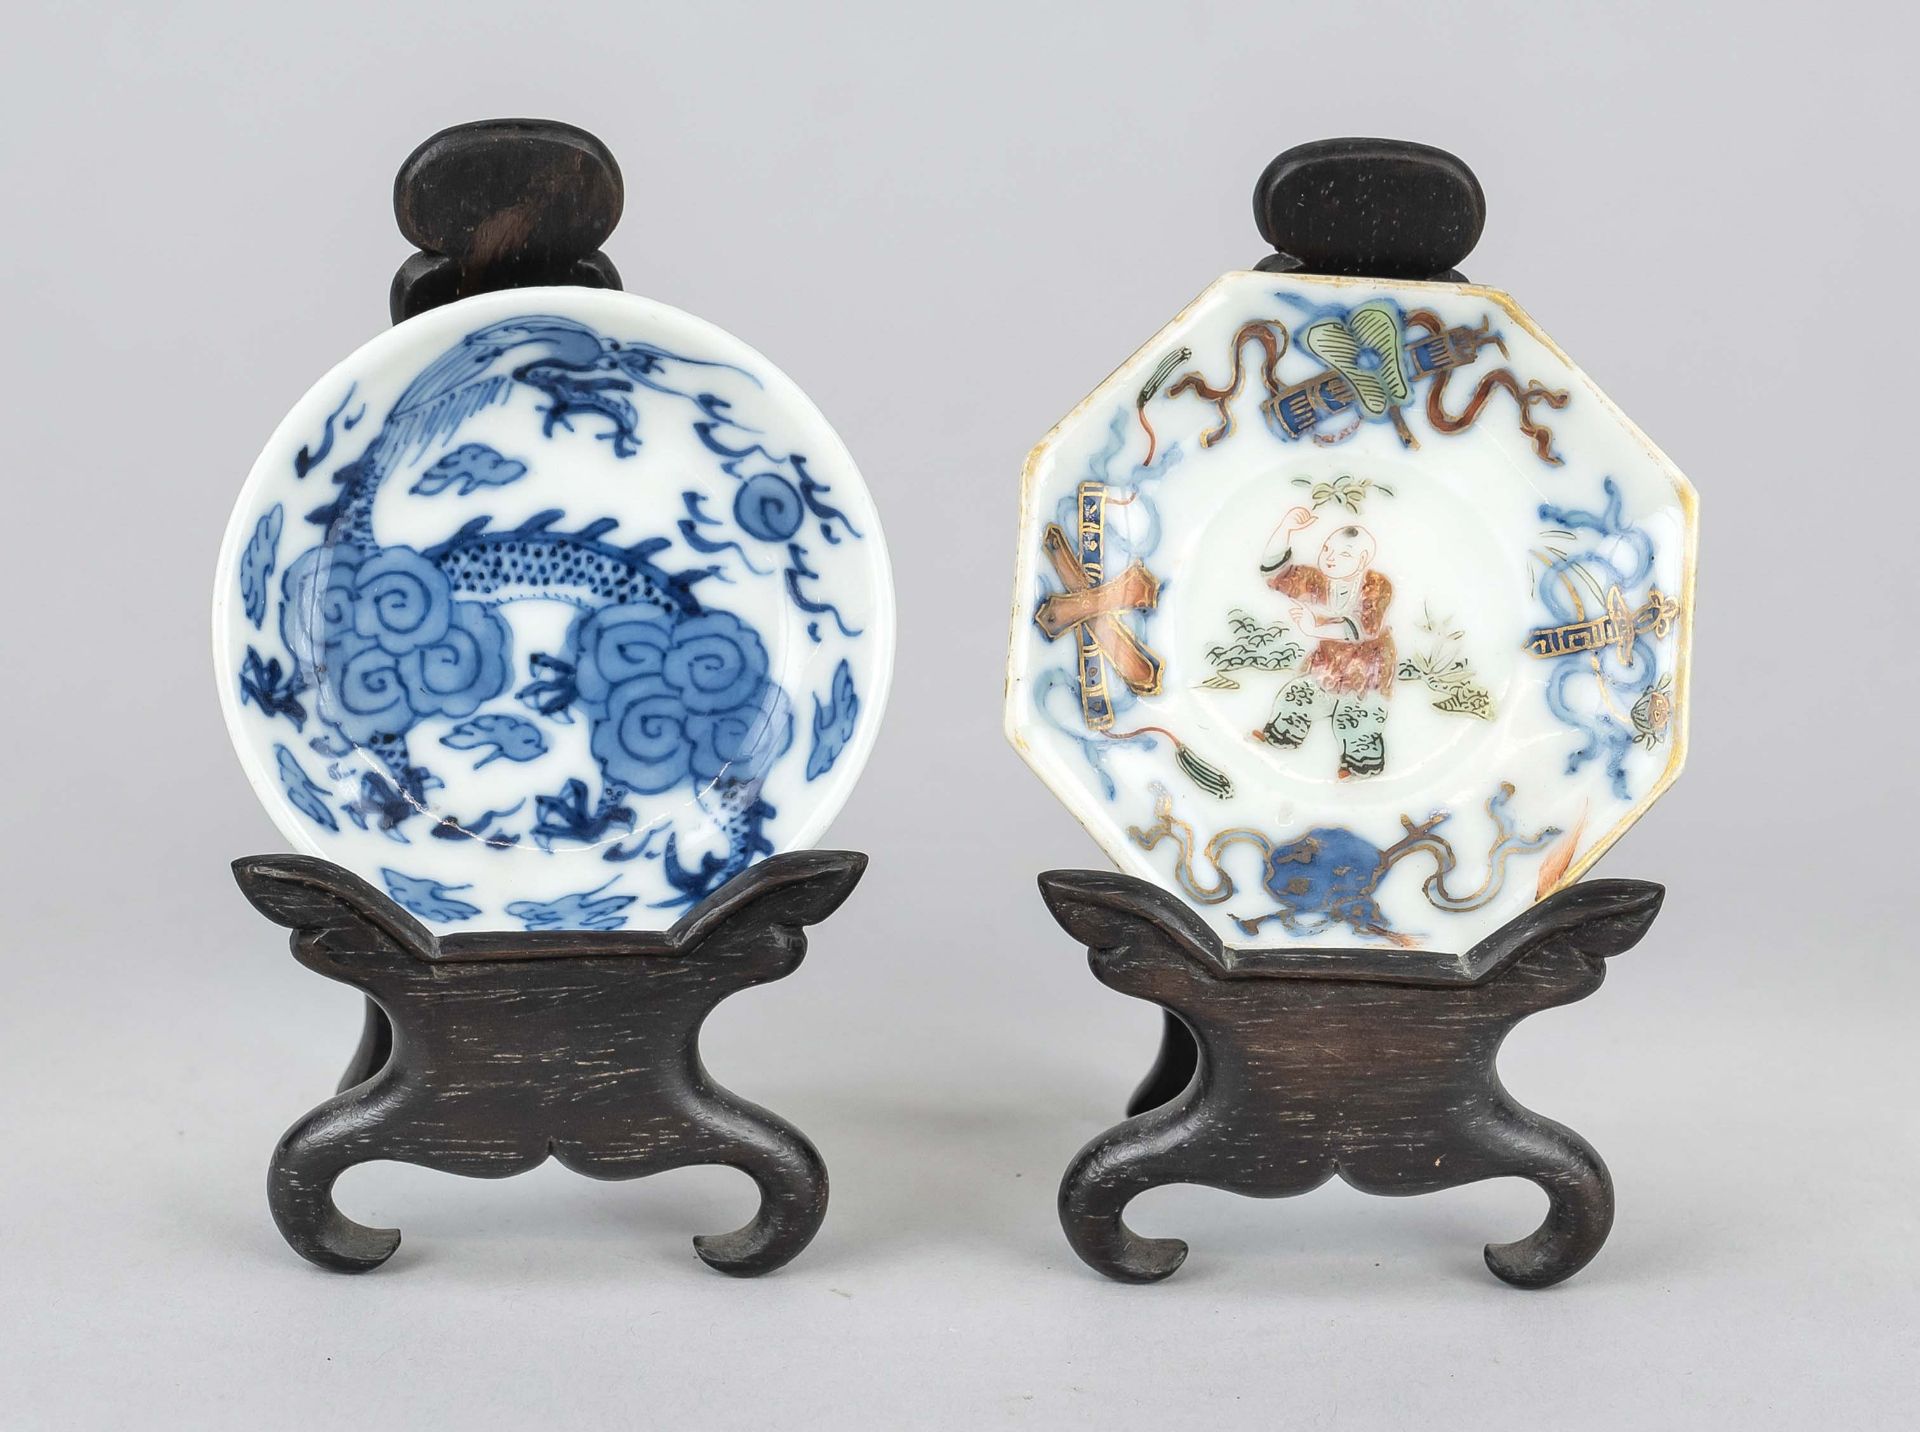 2 Miniature plates, China, 19th c., porcelain with polychrome glaze decoration, depicting children